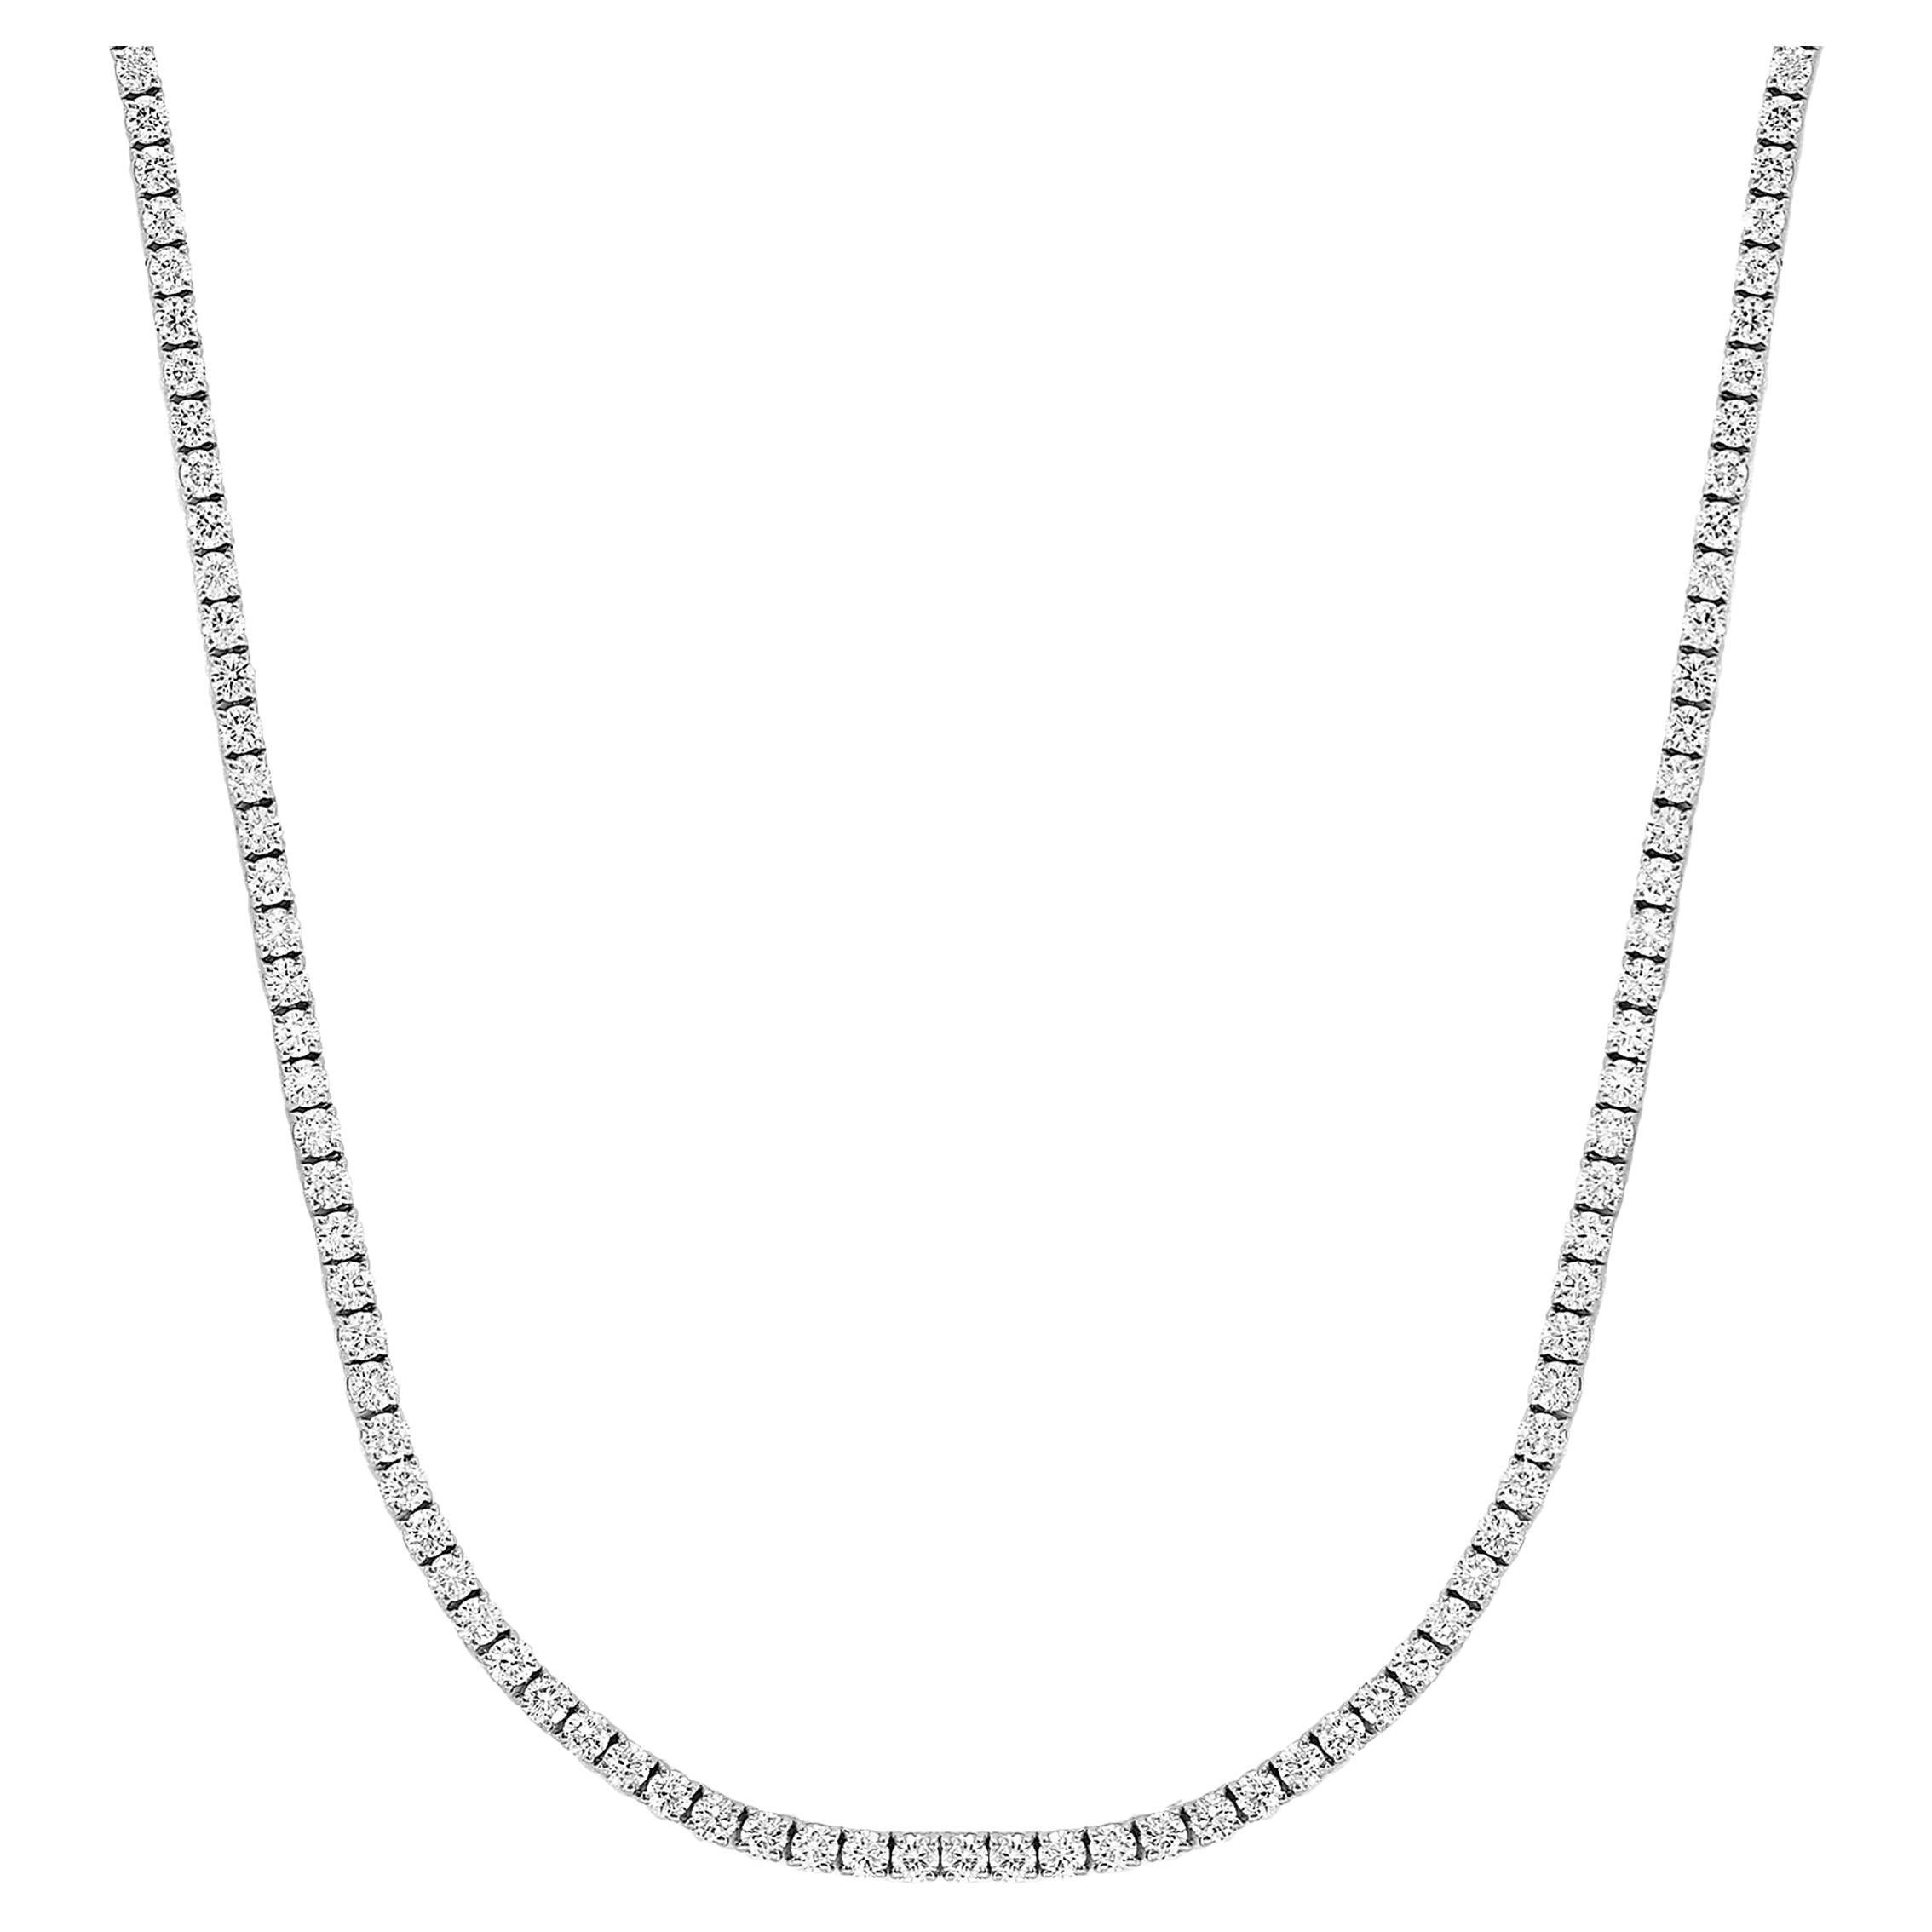 11.31 Carat Diamond Tennis Necklace in 14K White Gold